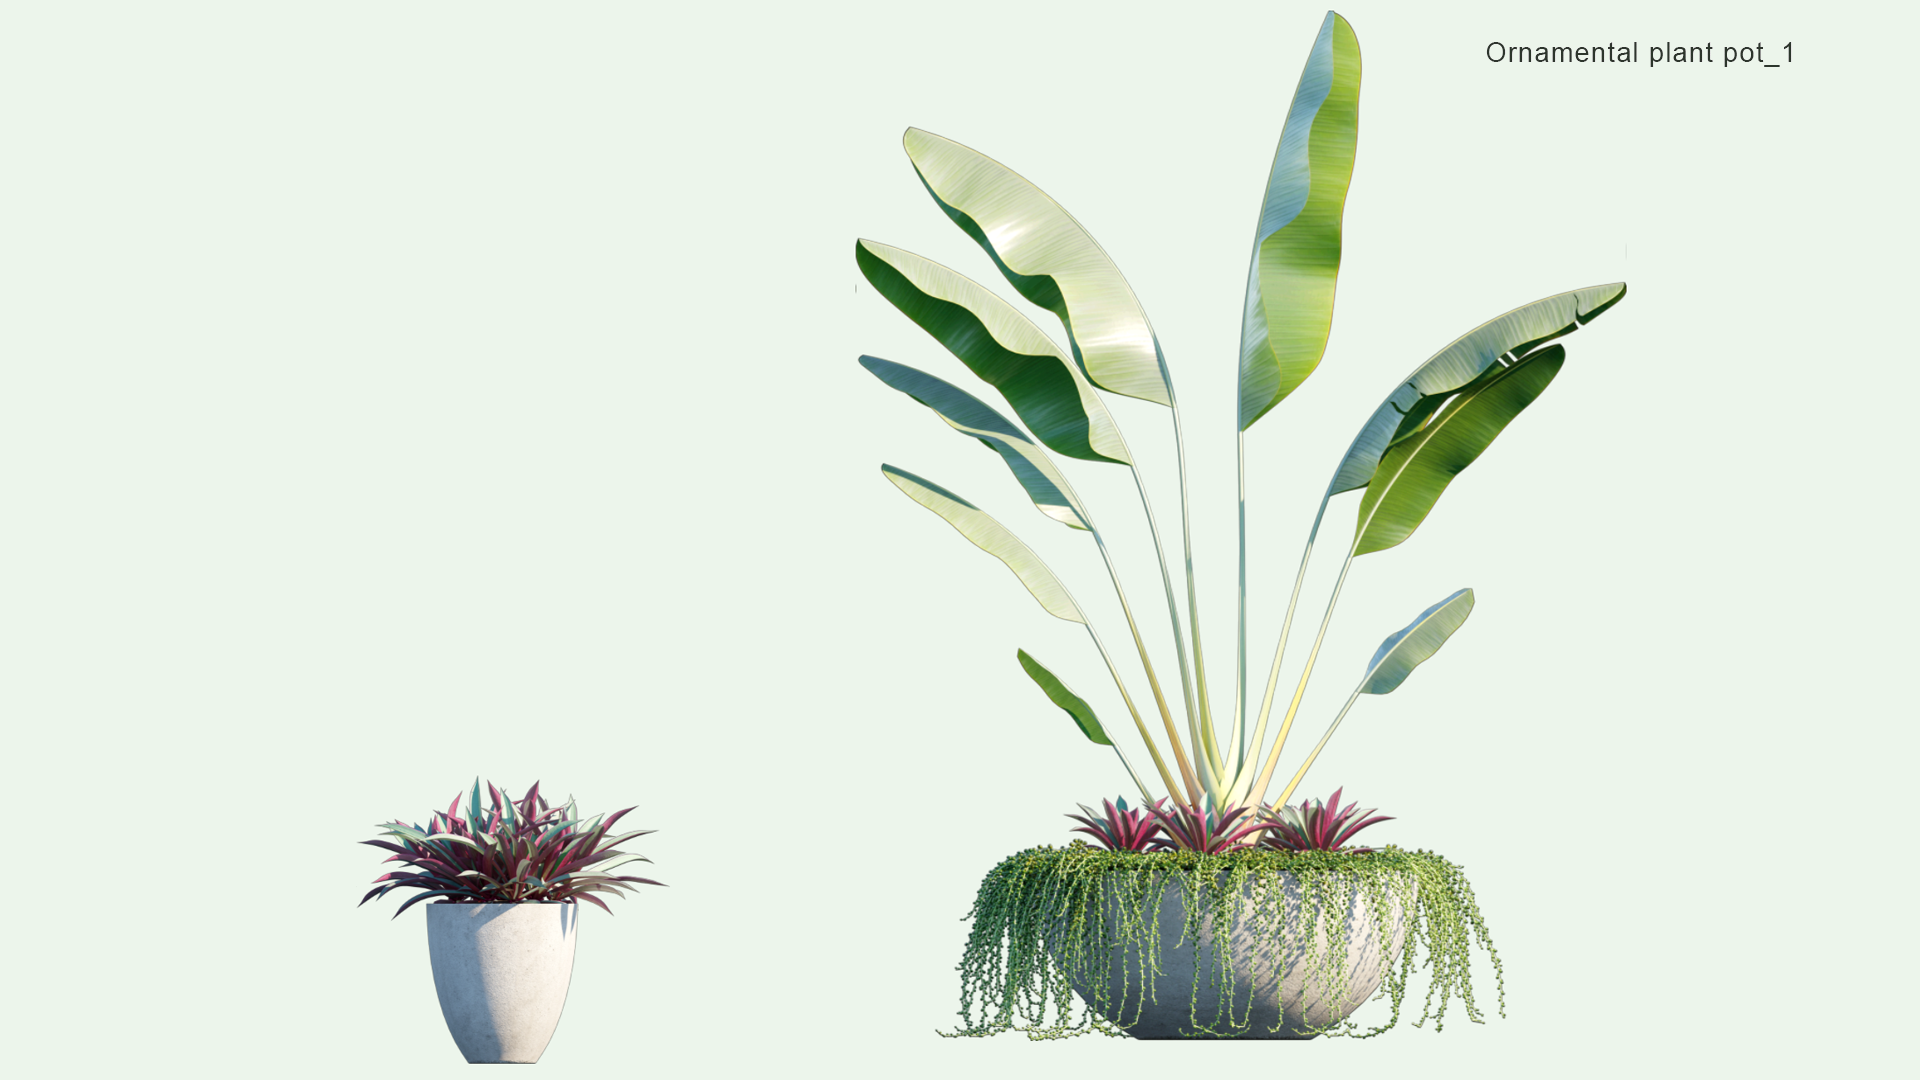 2D Ornamental Pot Plant 01 - Ravenala Madagascariensis, Sedum Morganianum, Tradescantia Spathacea